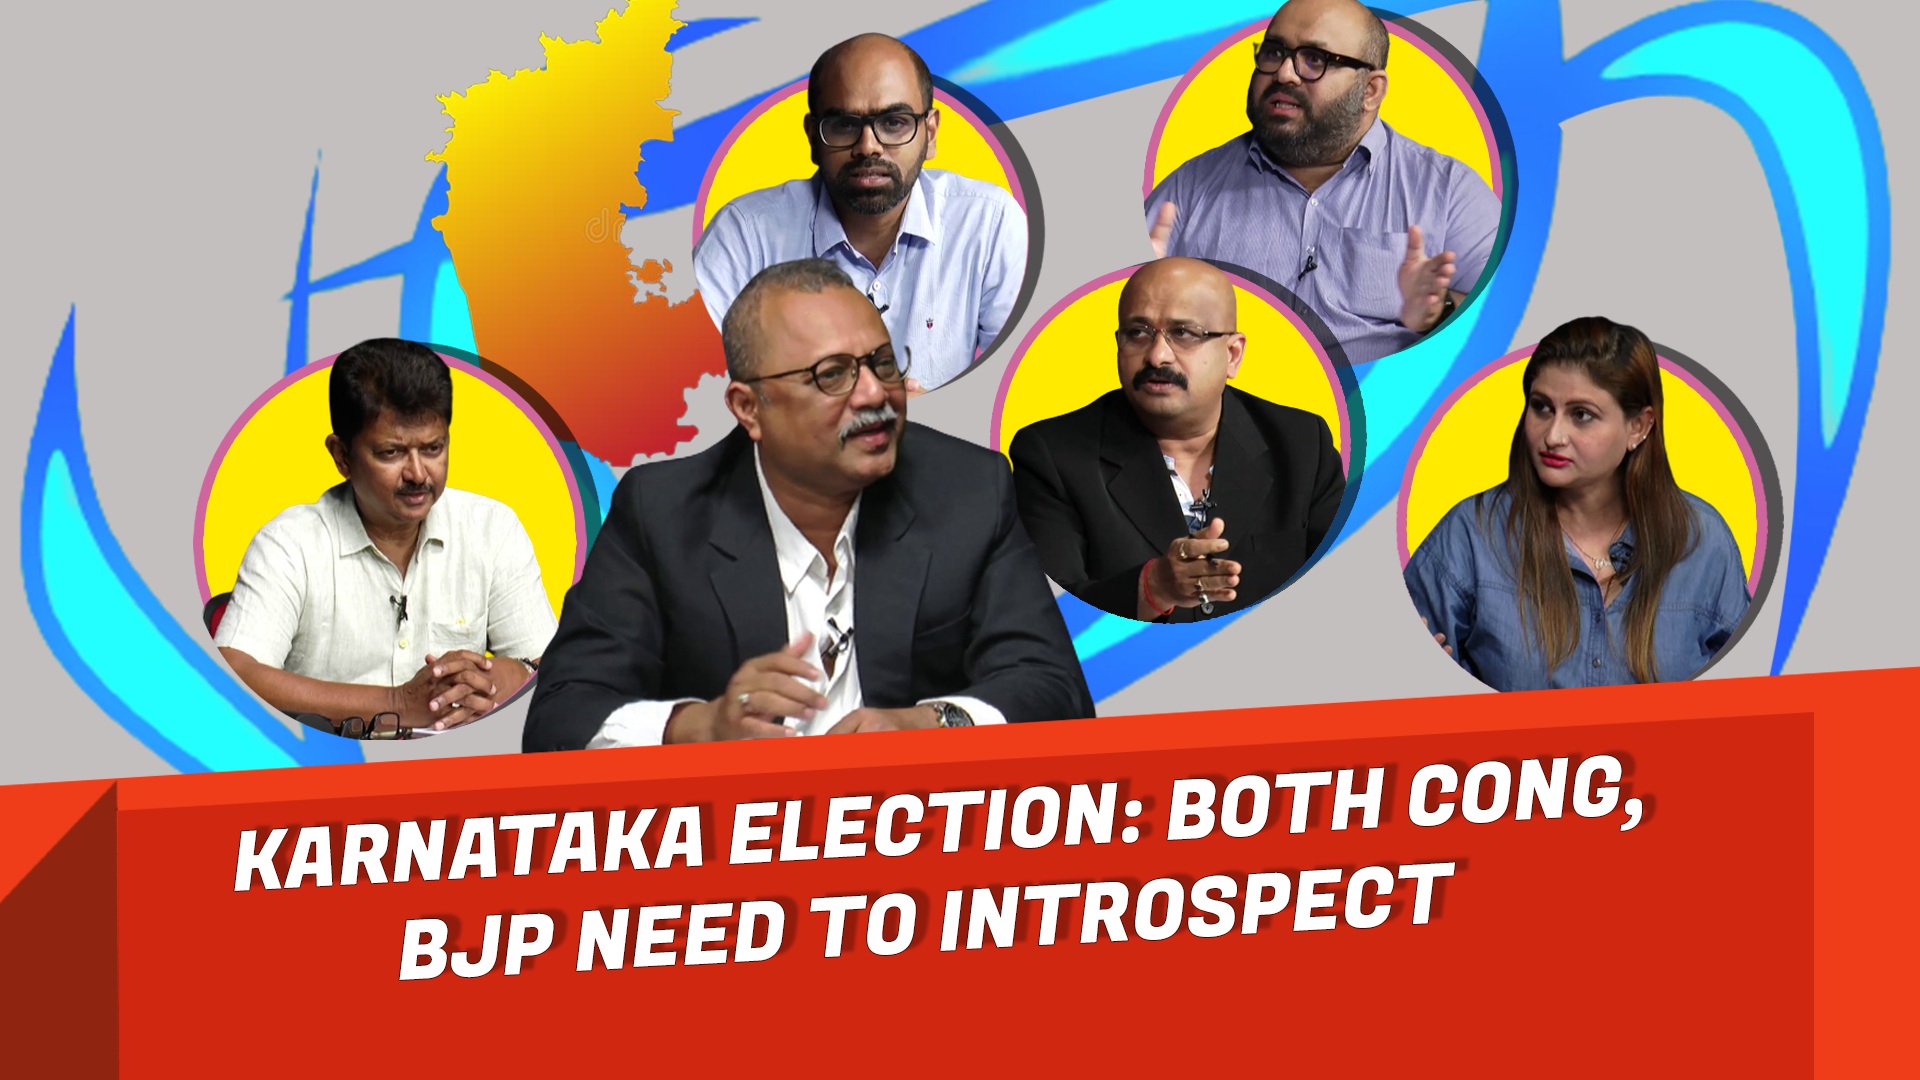 STORY BEHIND THE STORY : KARNATAKA ELECTION: BOTH CONG, BJP NEED TO INTROSPECT